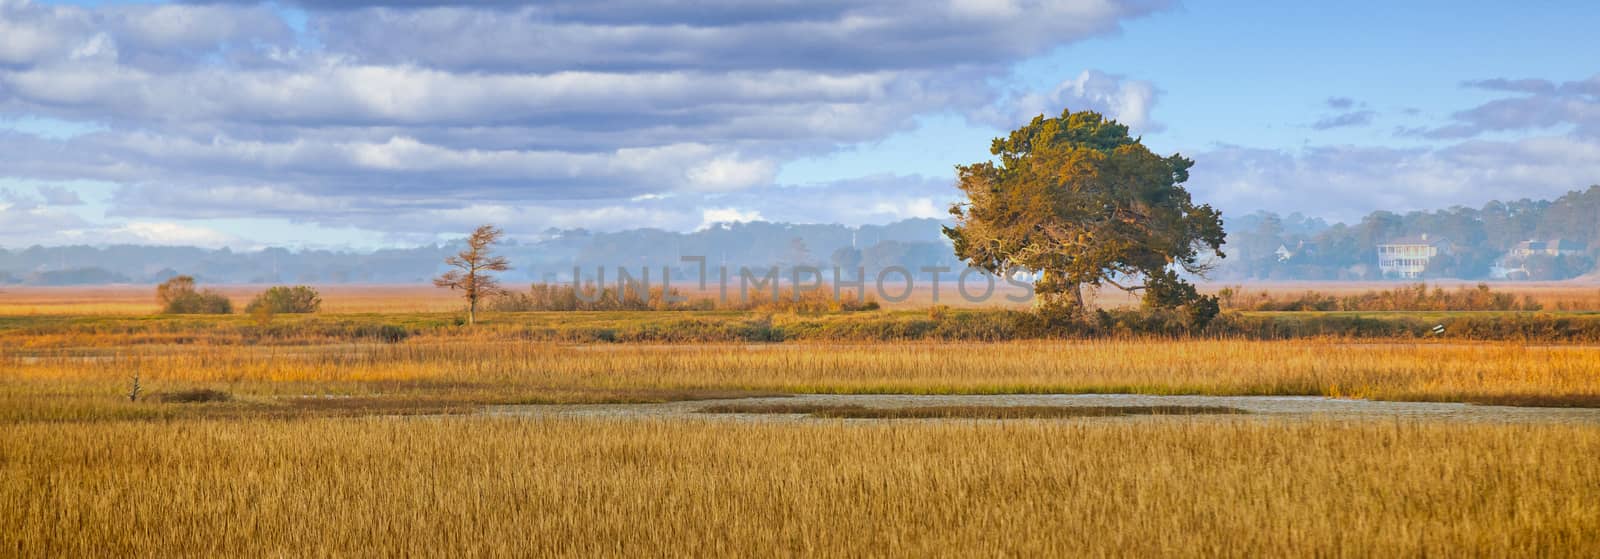 Lone Tree in Golden Light on Marsh by dbvirago